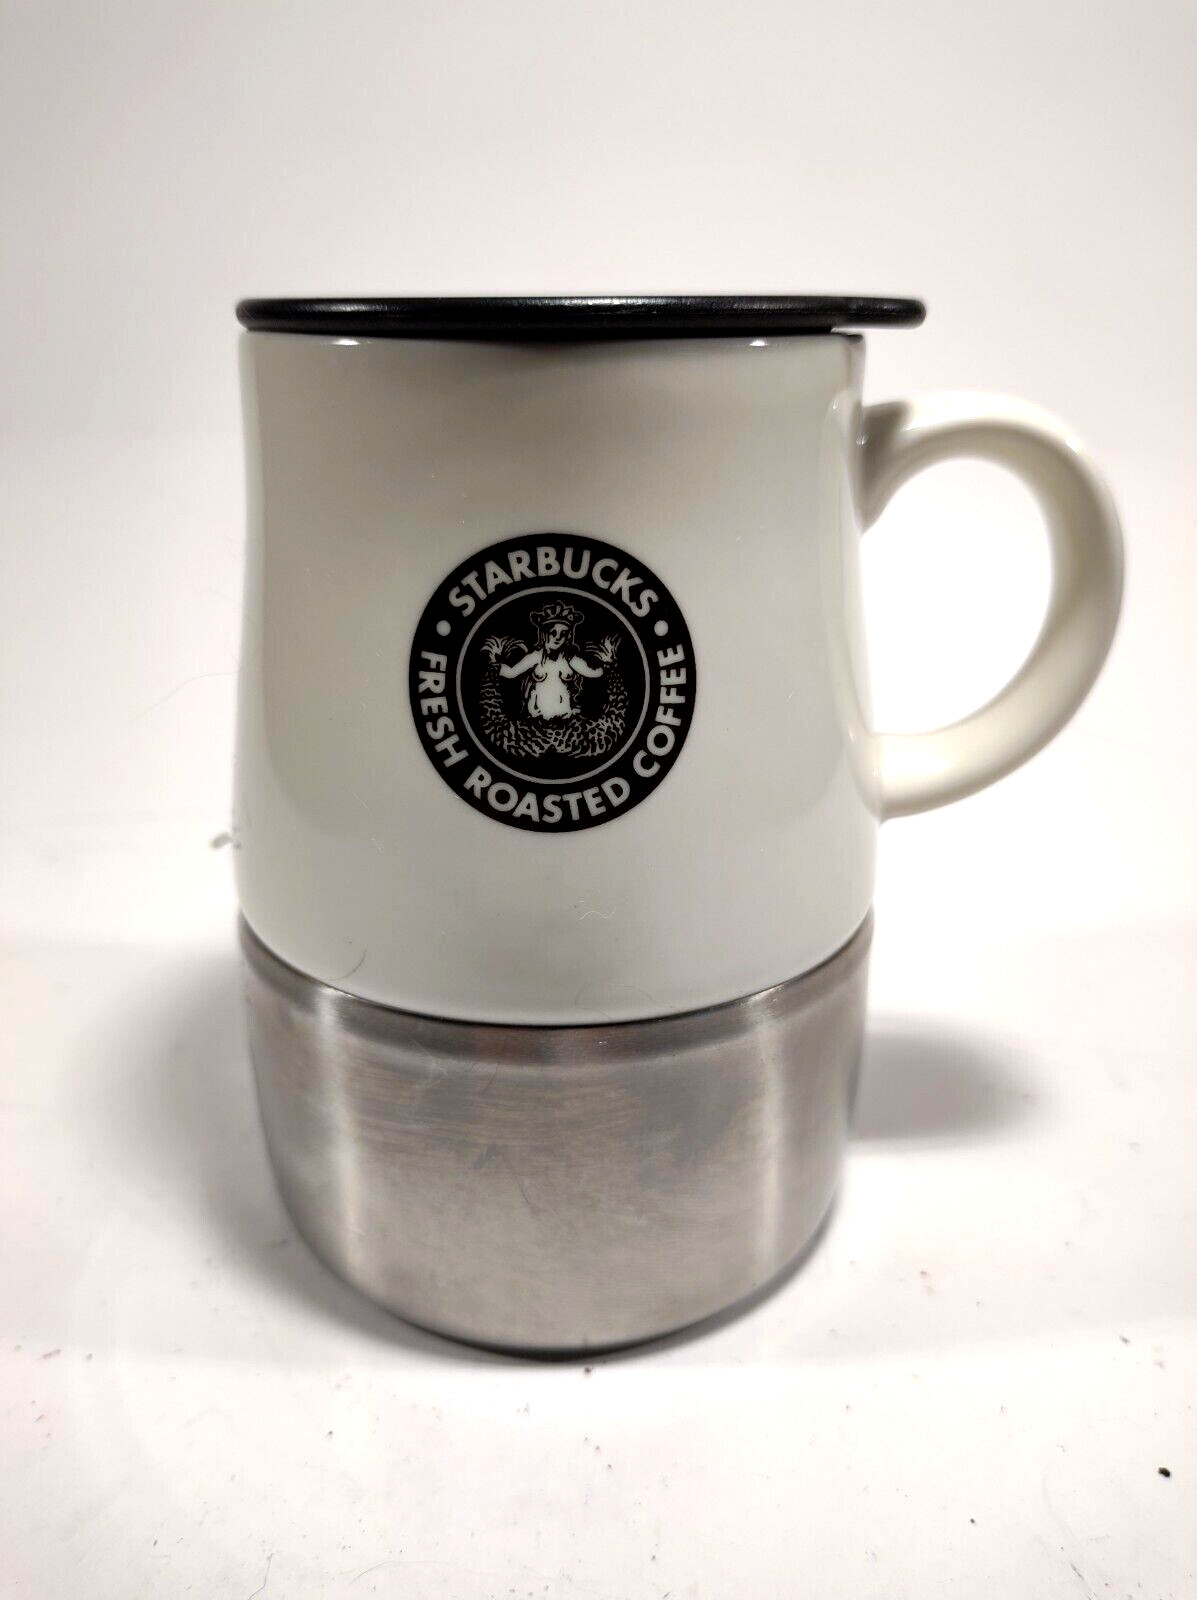 Starbucks Coffee Mug With Stainless Bottom White Ceramic Metal Cup 14 Oz 2004